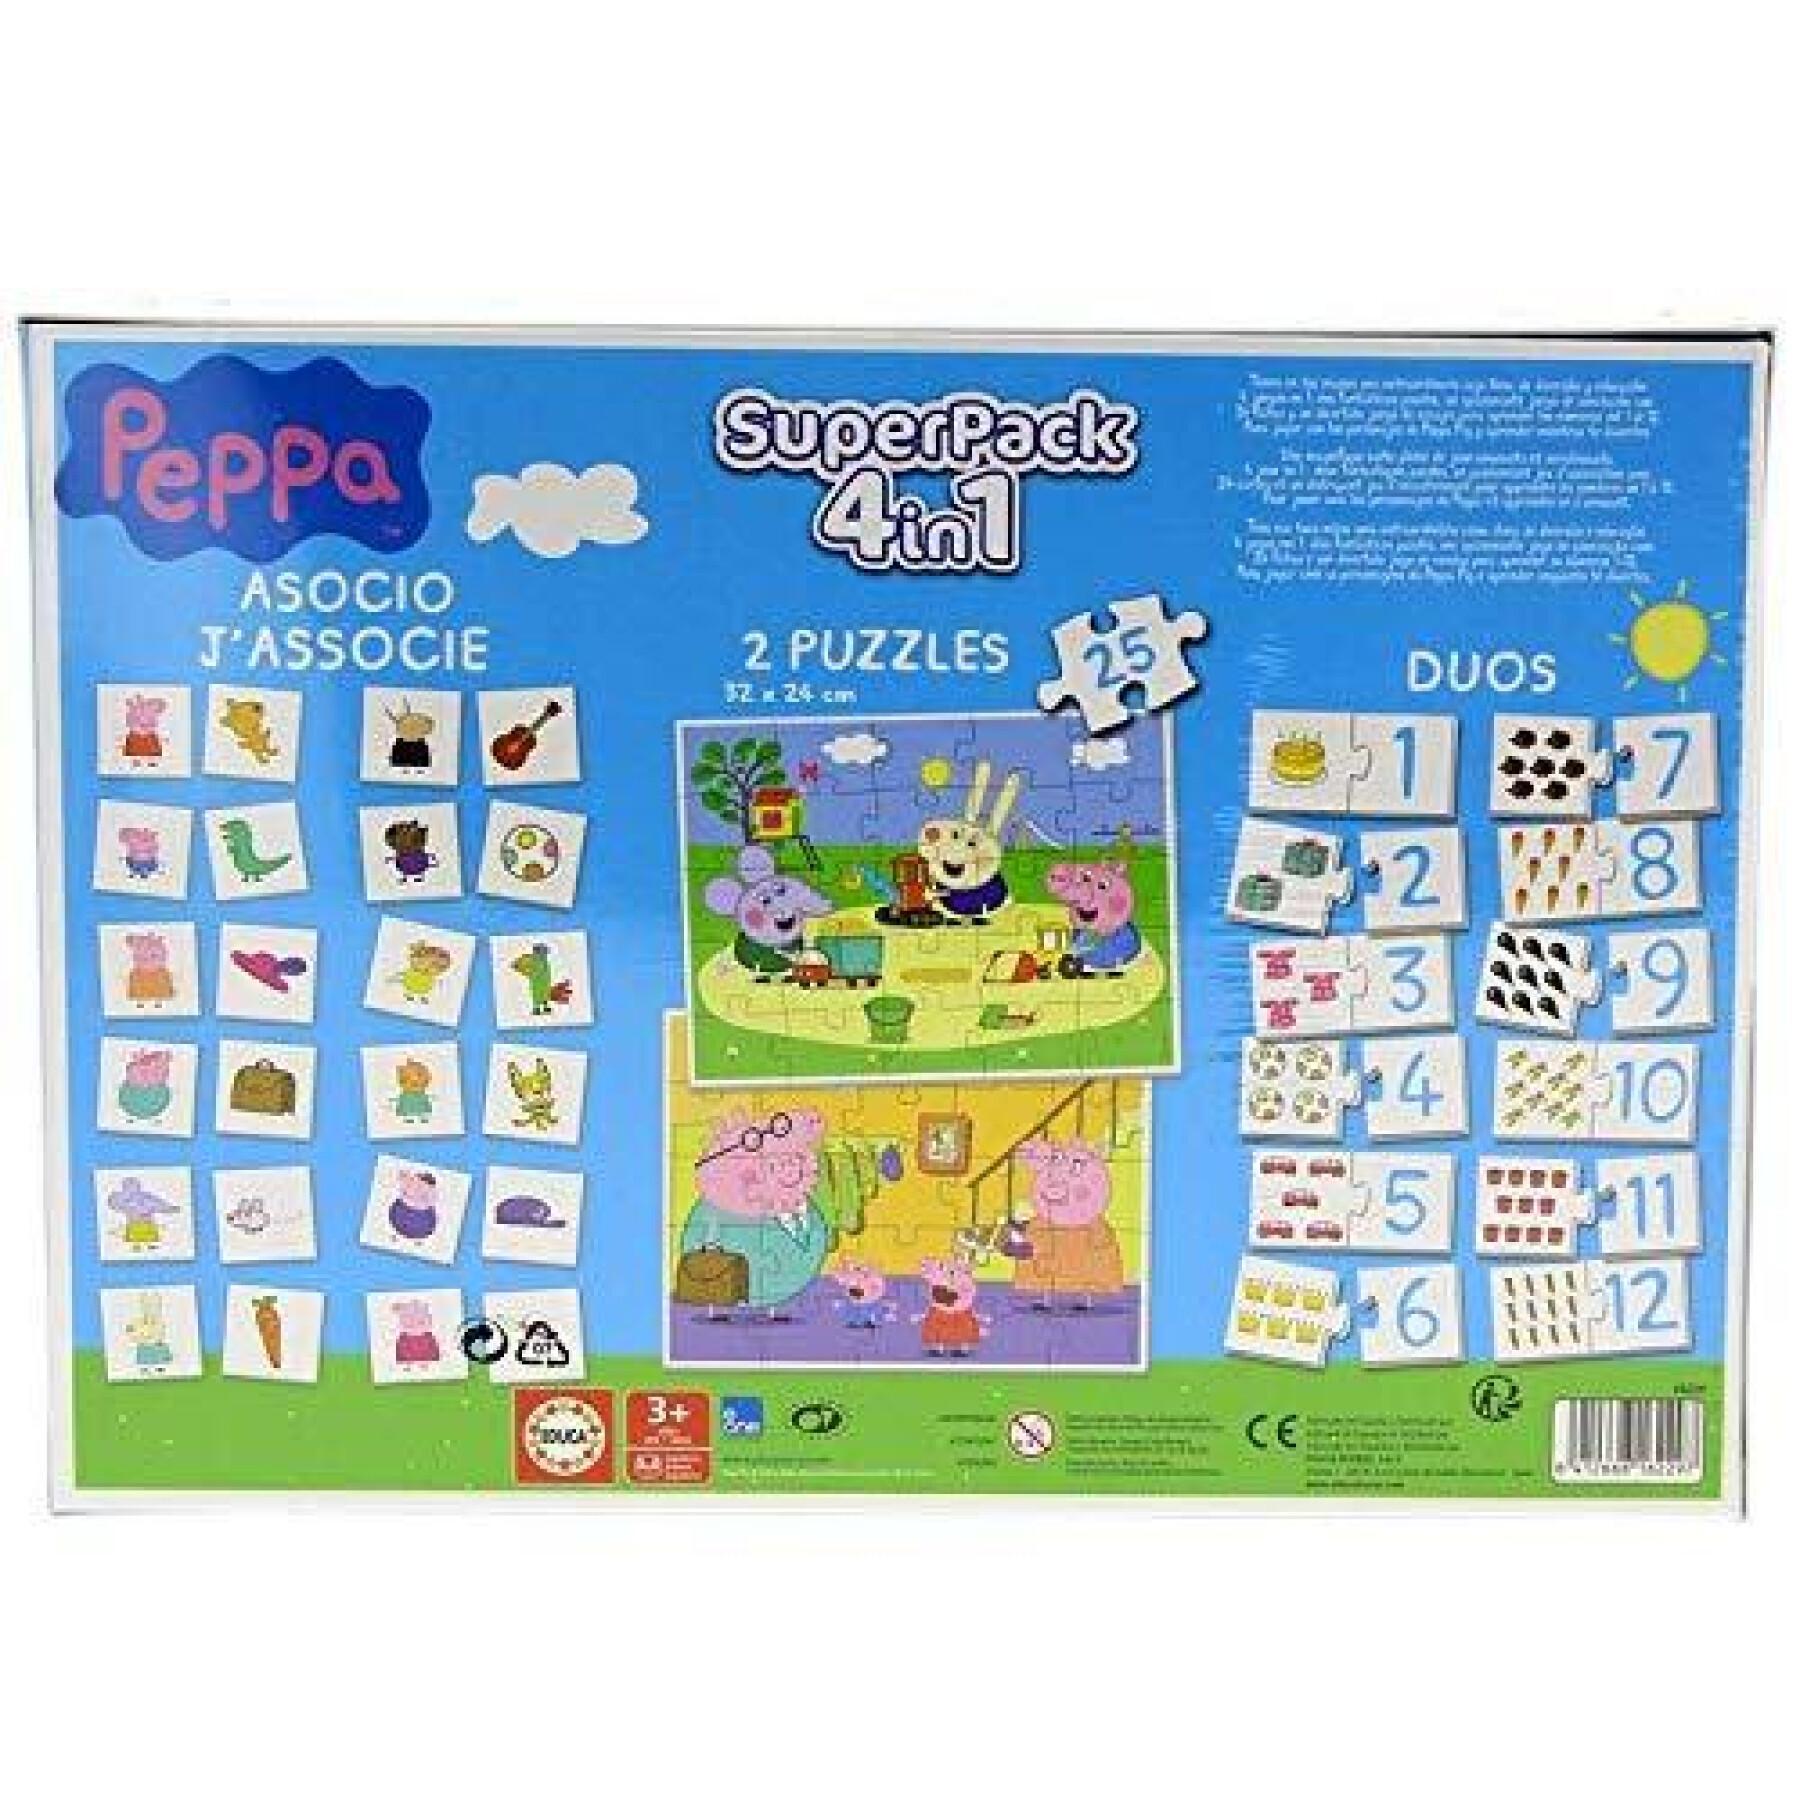 Set of 4 educational games Peppa Pig SúperLot